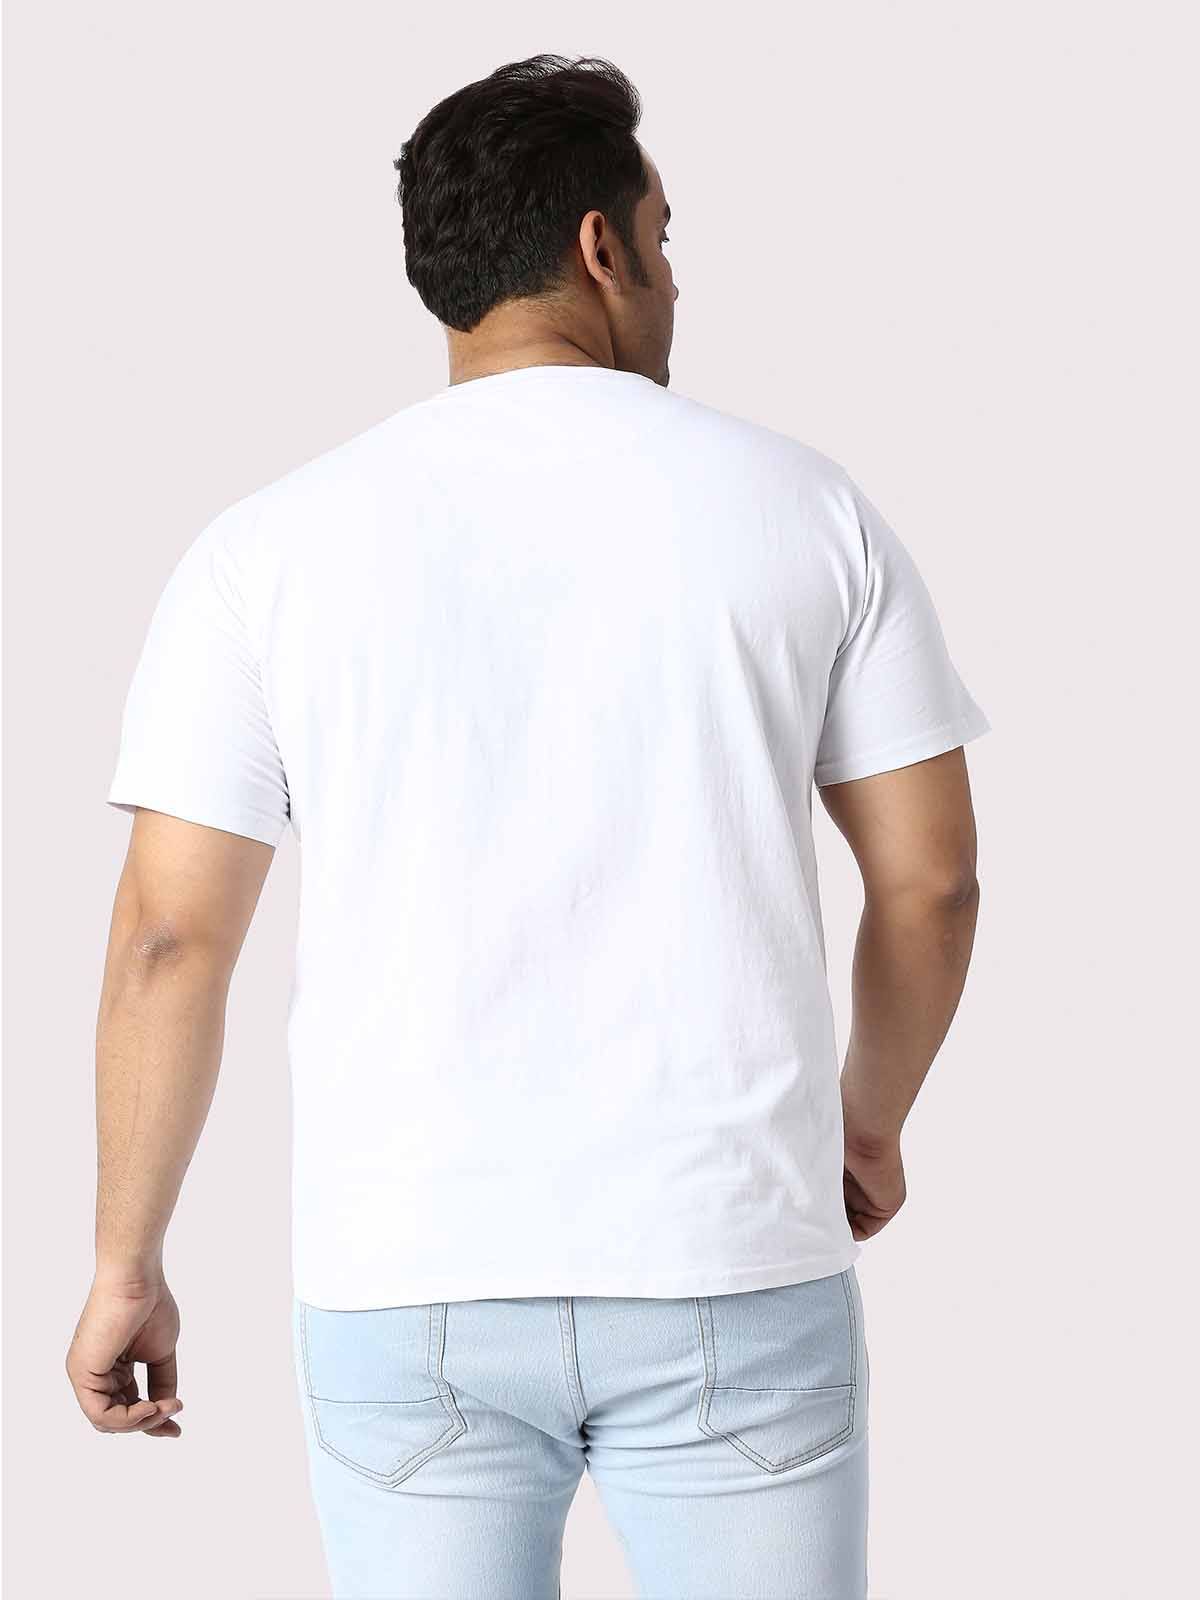 Men Plus Size White Yes You Can Printed Round Neck T-Shirt - Guniaa Fashions